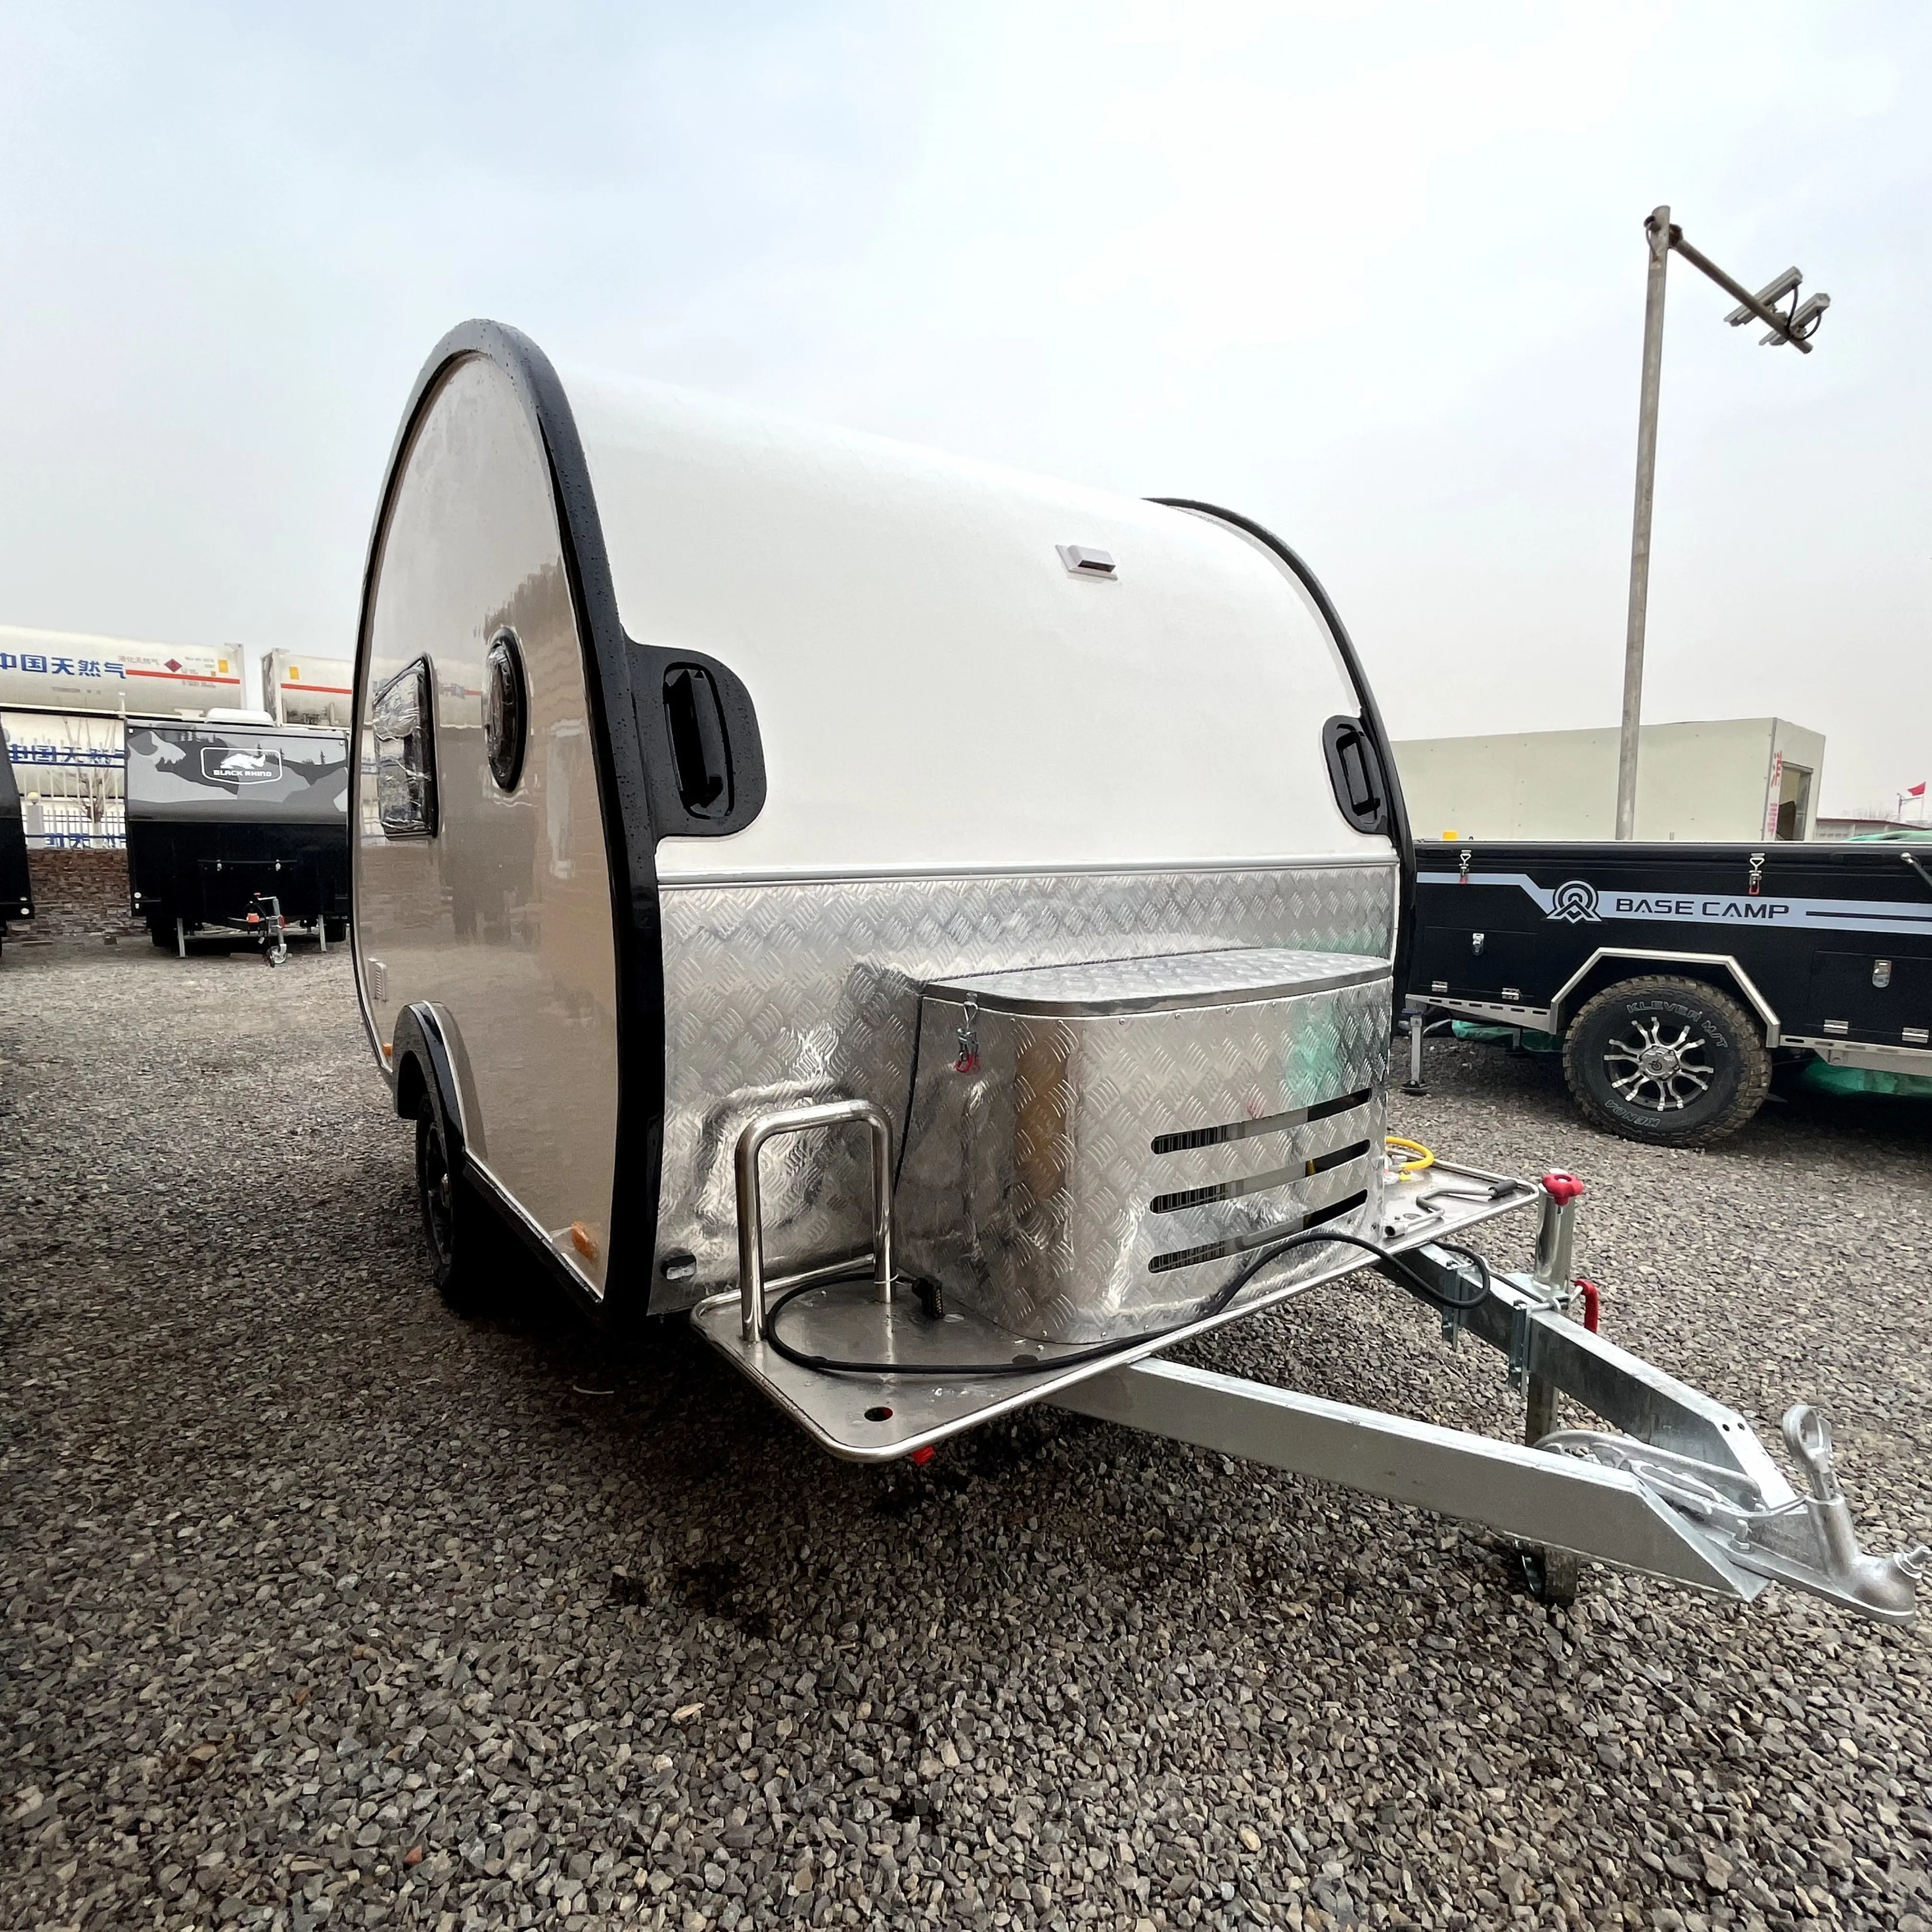 Fc trailer CB Aluminium schwarz Serie Offroad Camping Anhänger mit Küchen ausstattung